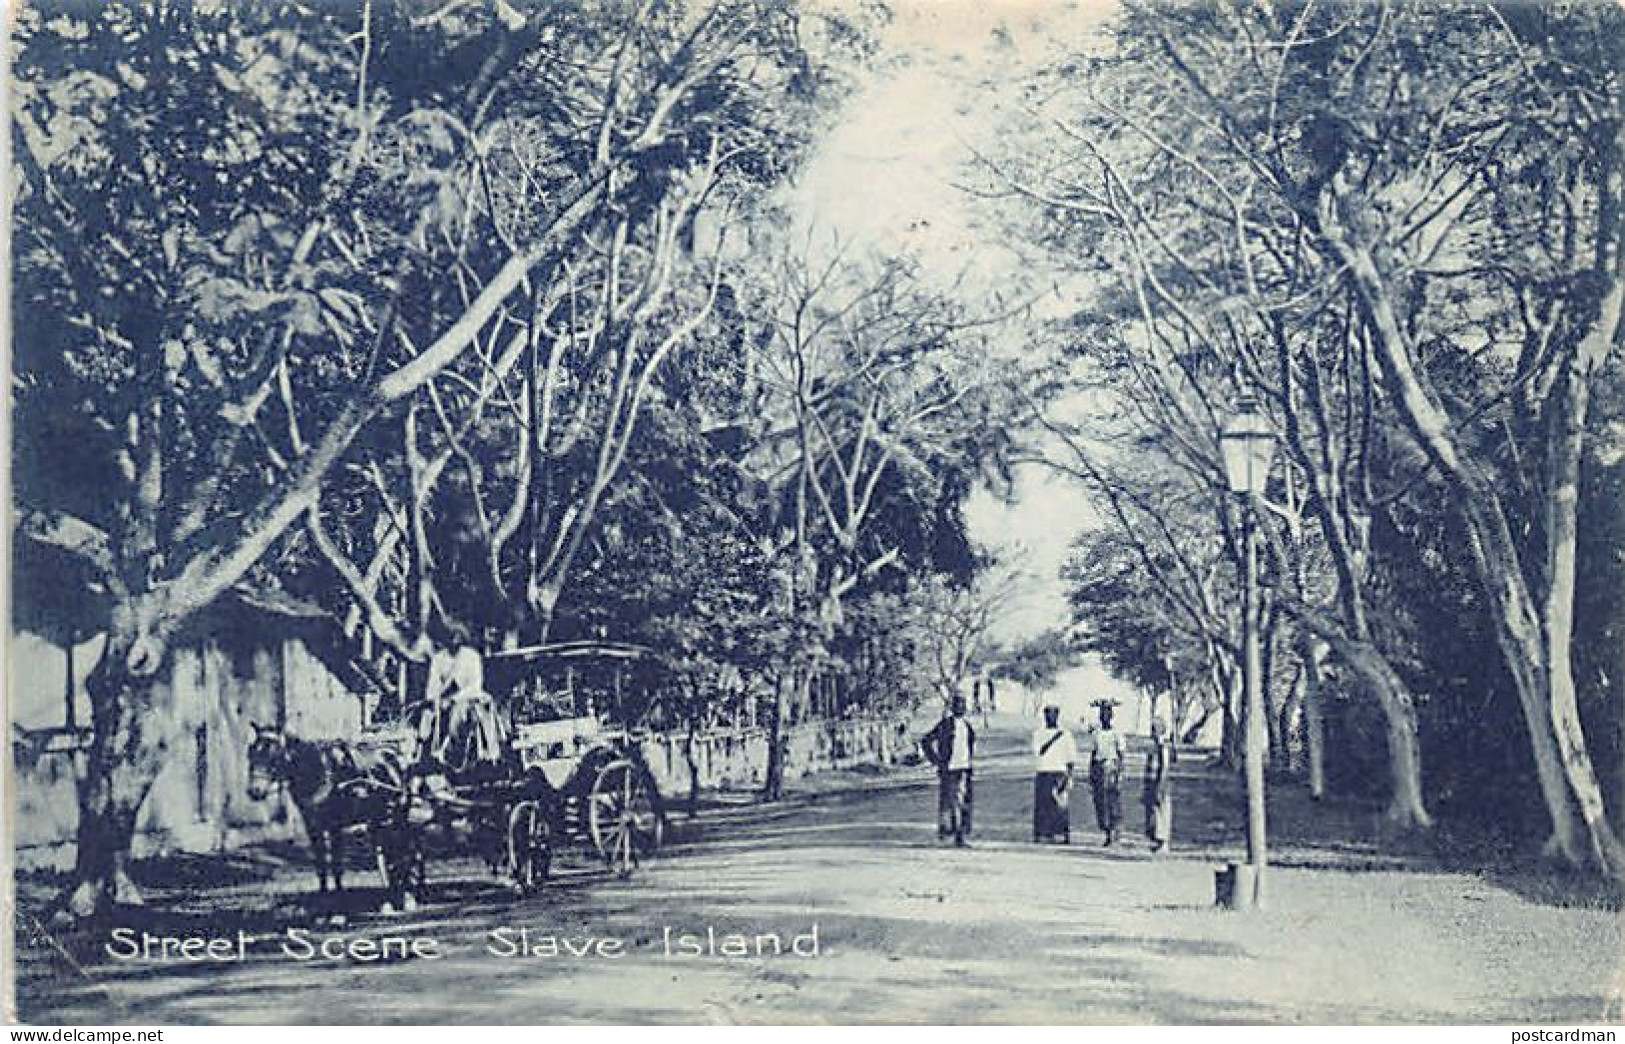 Sril Lanka - Slave Island - Street Scene - SEE STAMP AND POSTMARK - Publ. The Colombo Apothecaries Co. Ltd.  - Sri Lanka (Ceylon)